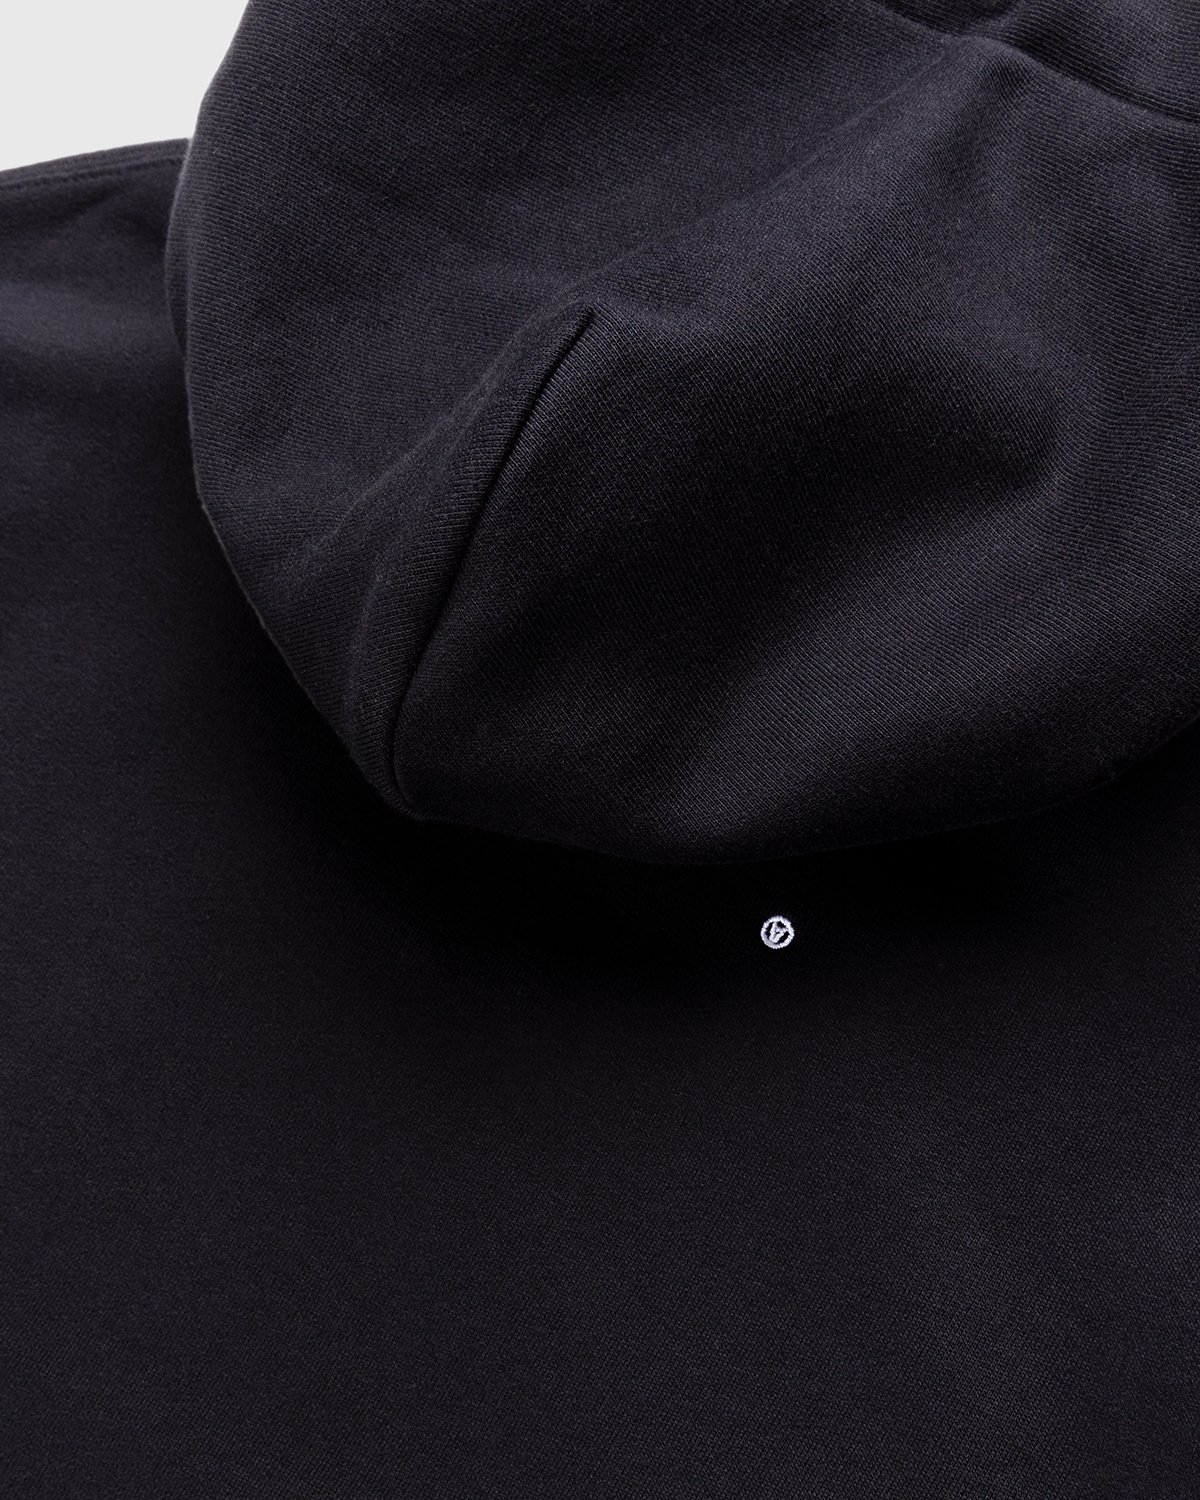 ACRONYM - S26-PR Hoodie Black - Clothing - Black - Image 3